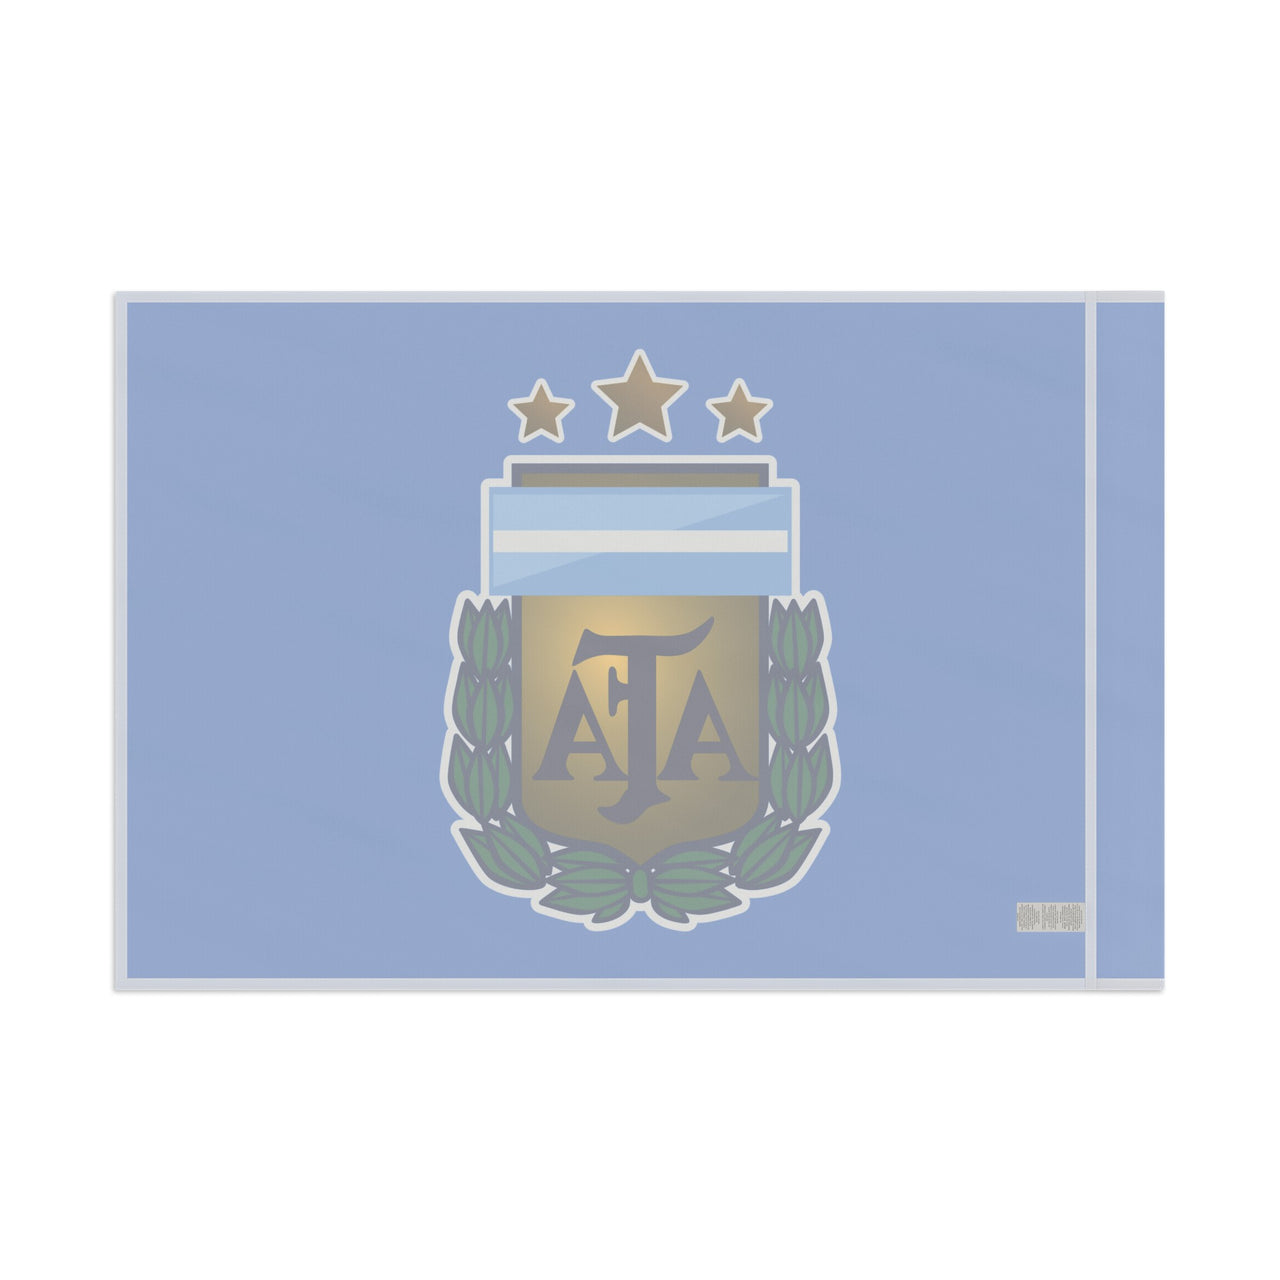 Argentina National Team Flag